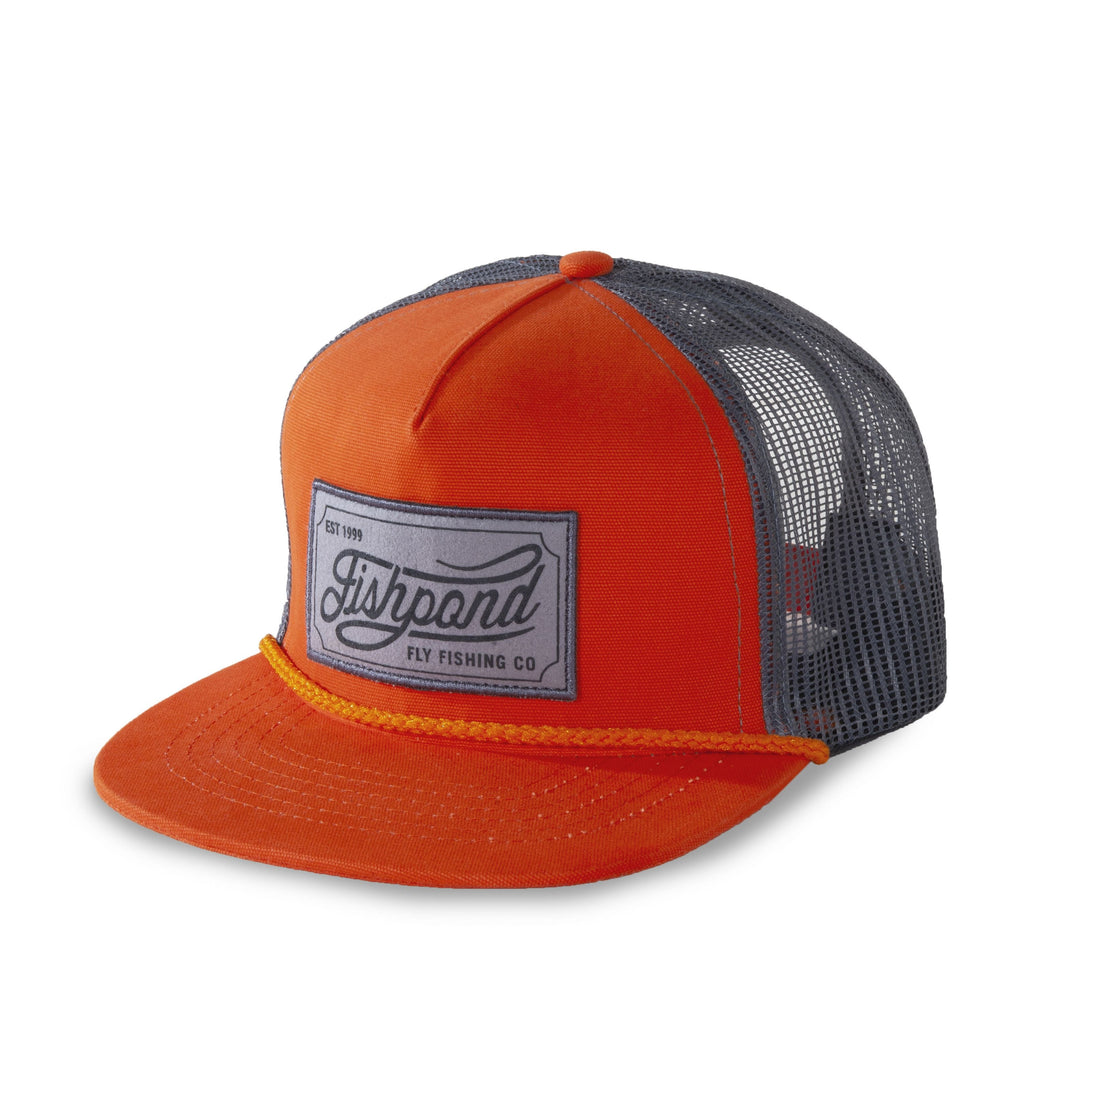 Fishpond Heritage Trucker Hat (Orange/Charcoal)